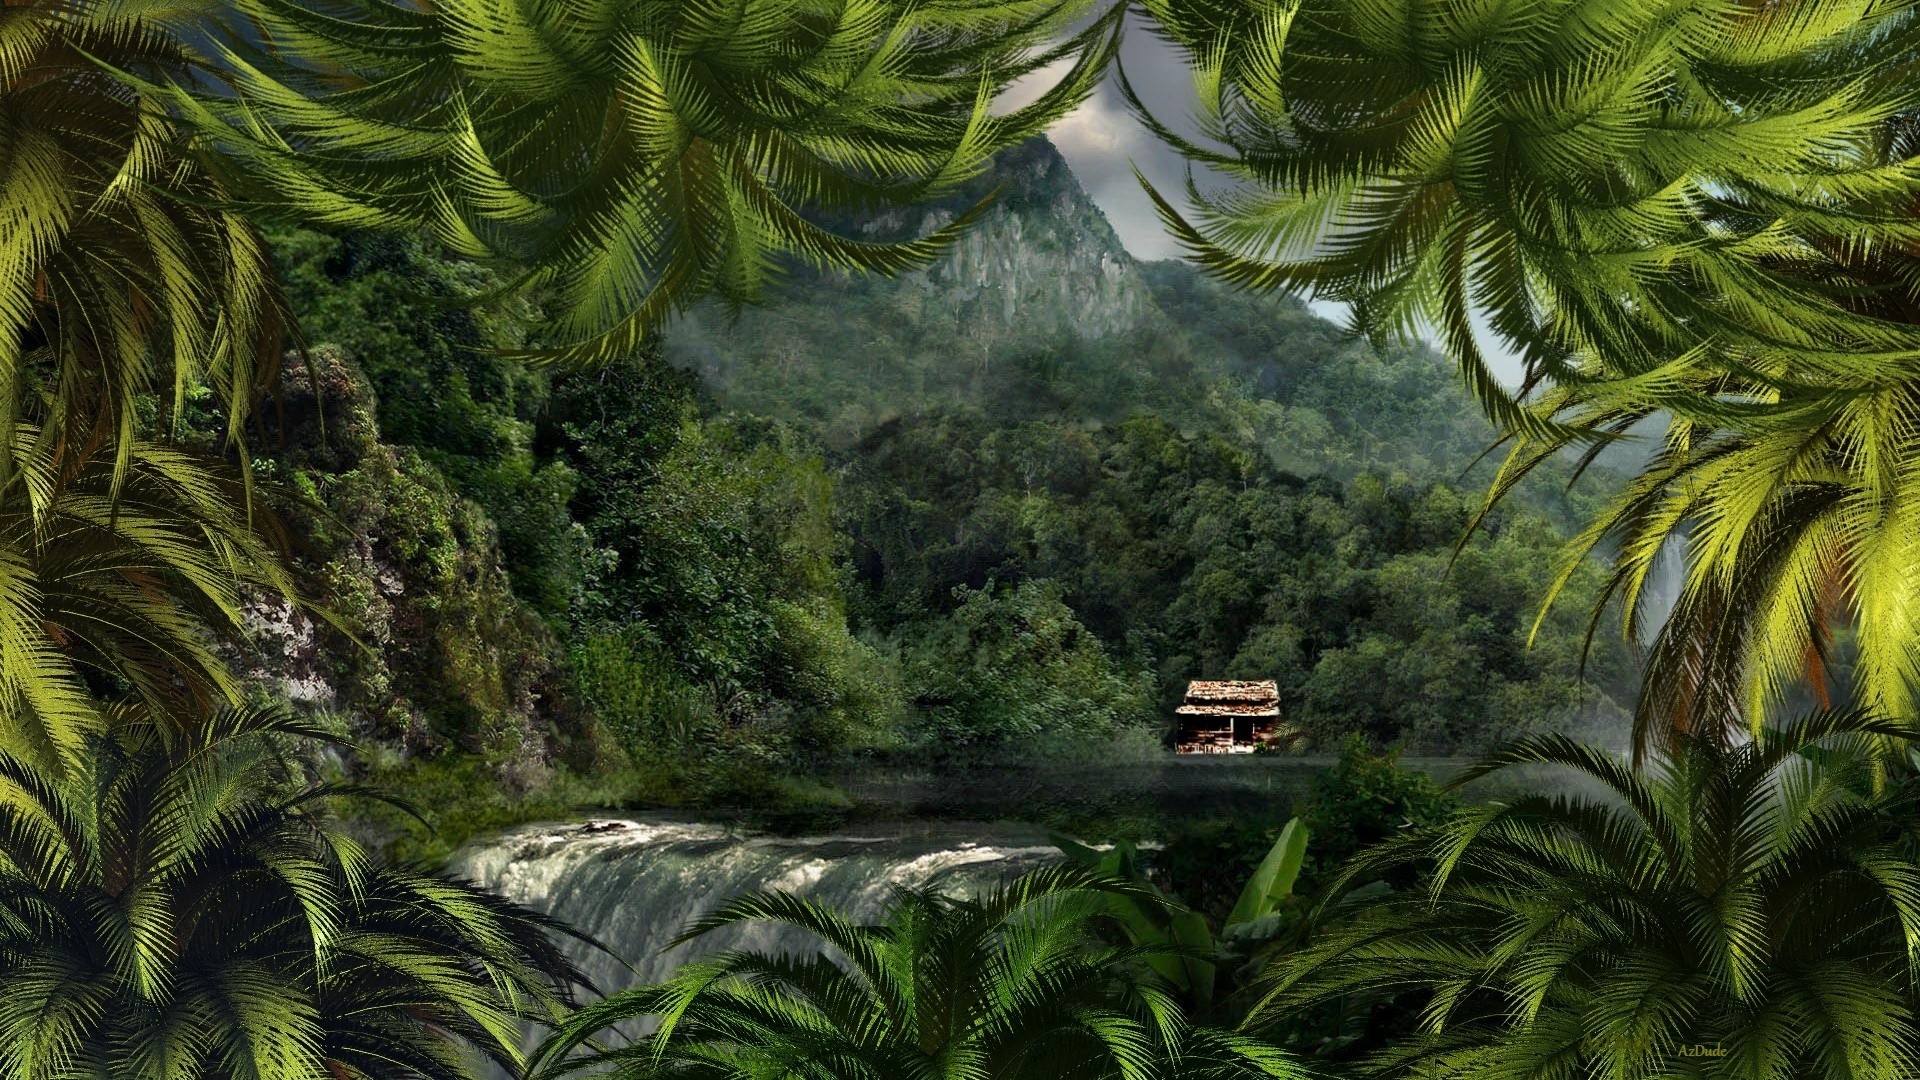 - Hd - Jurassic Park Jungle , HD Wallpaper & Backgrounds